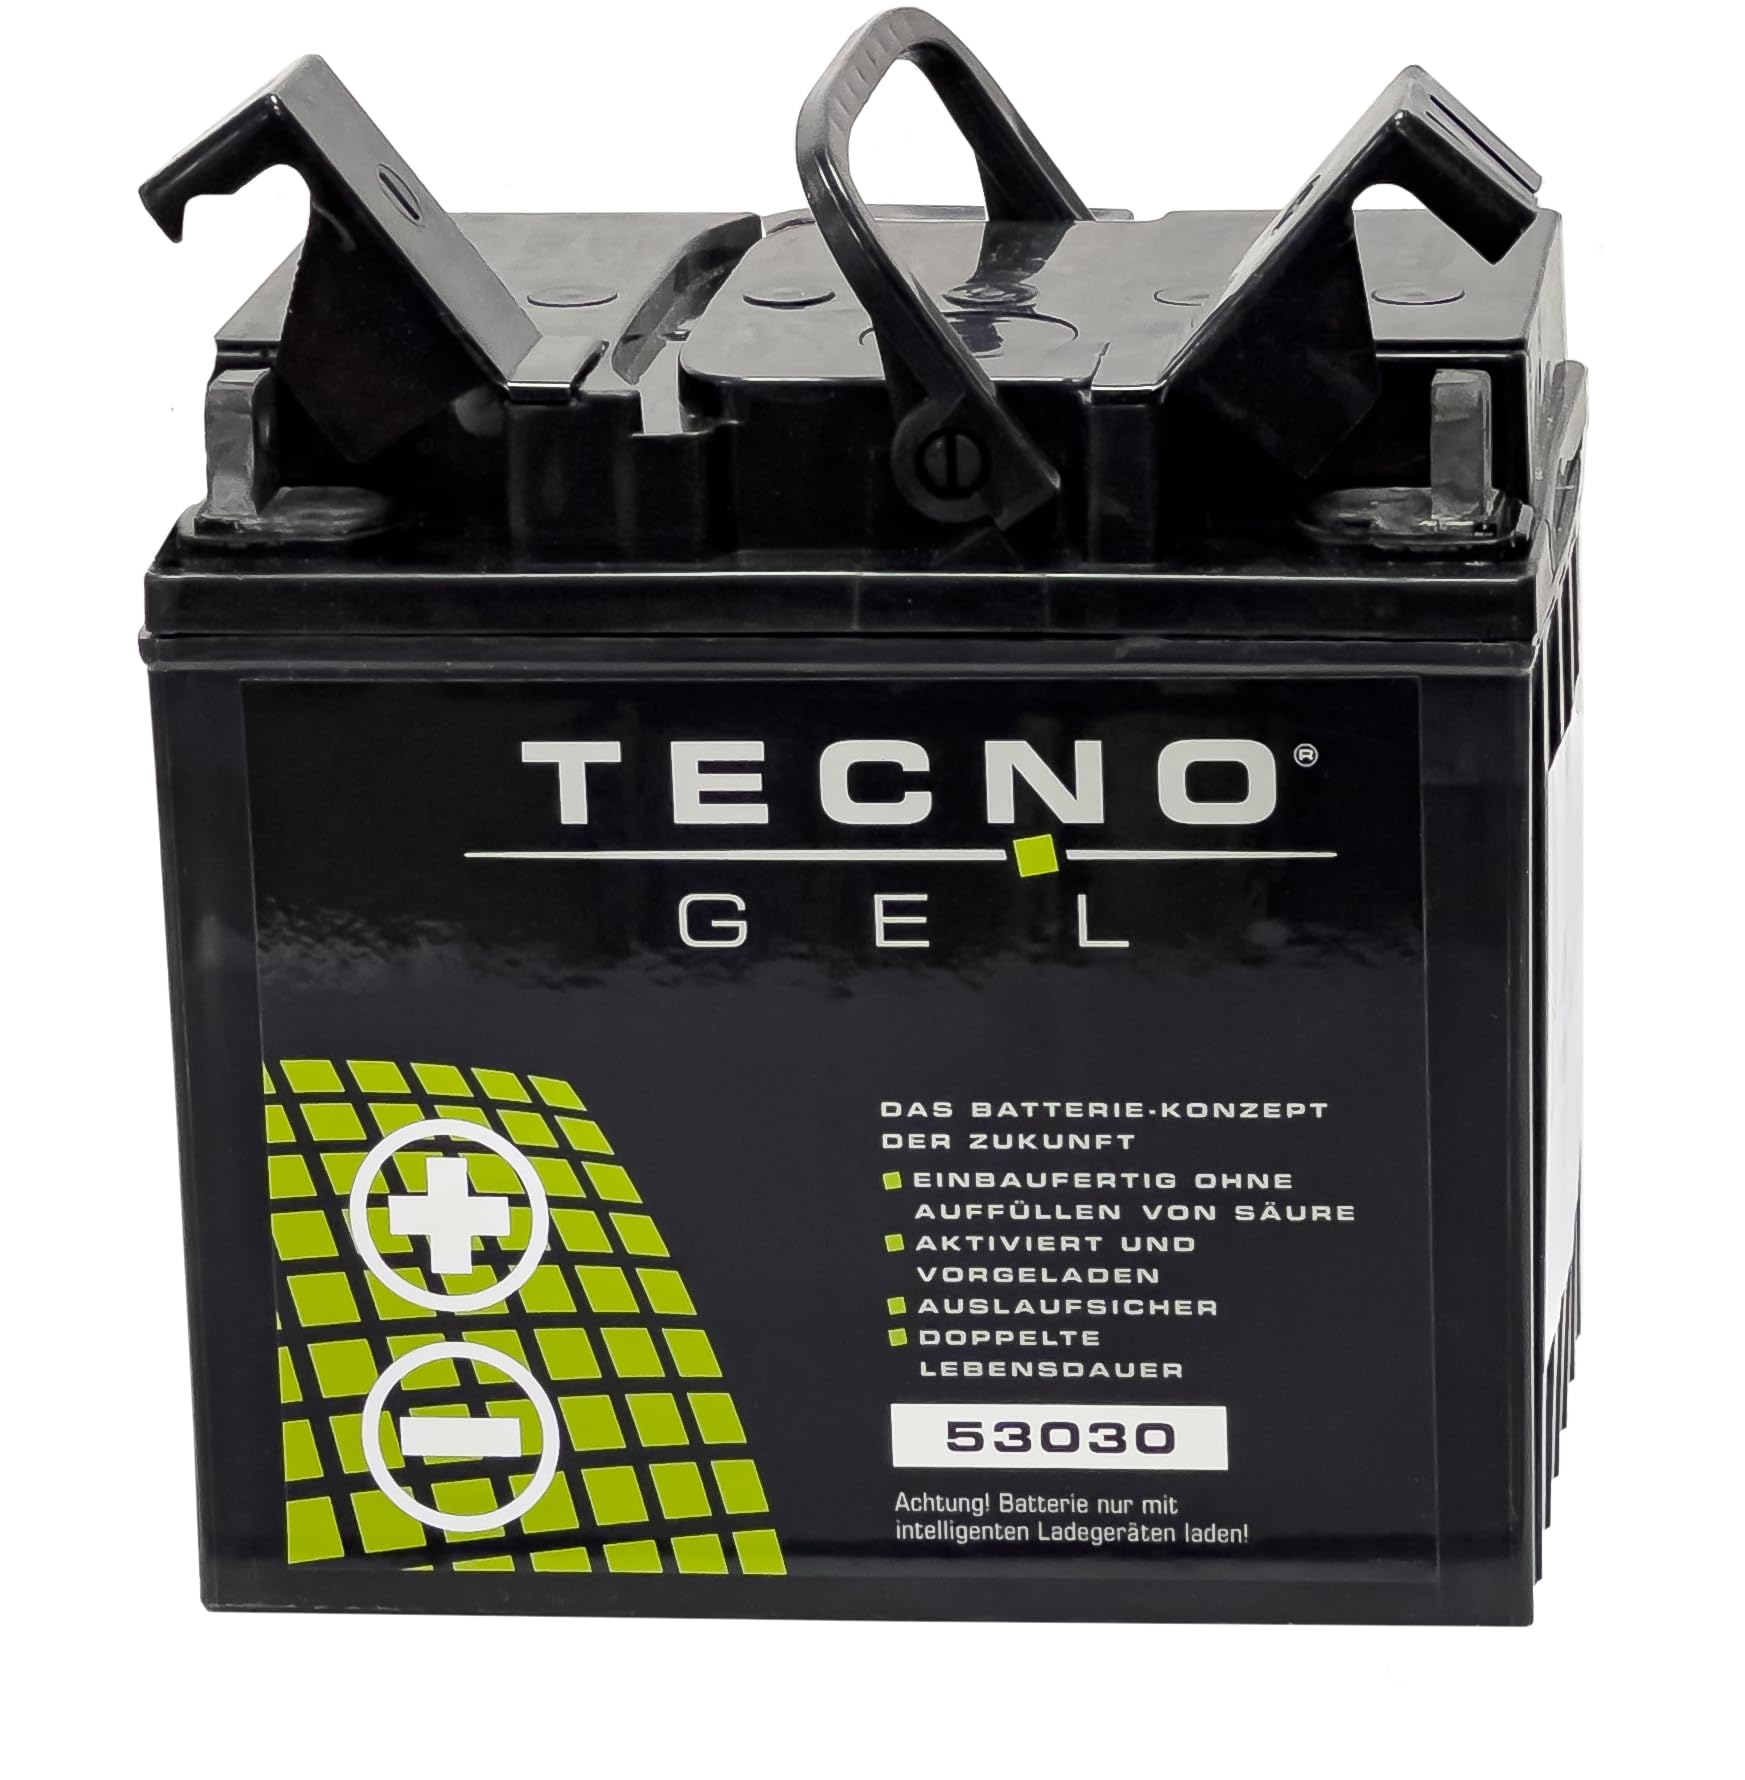 TECNO-GEL Motorrad Qualitäts Batterie 53030 für MOTO GUZZI Le Mans 850 I, II, III, 1000 1975-1993, 12V Gel-Batterie 30Ah, 187x130x170 mm von Wirth-Federn